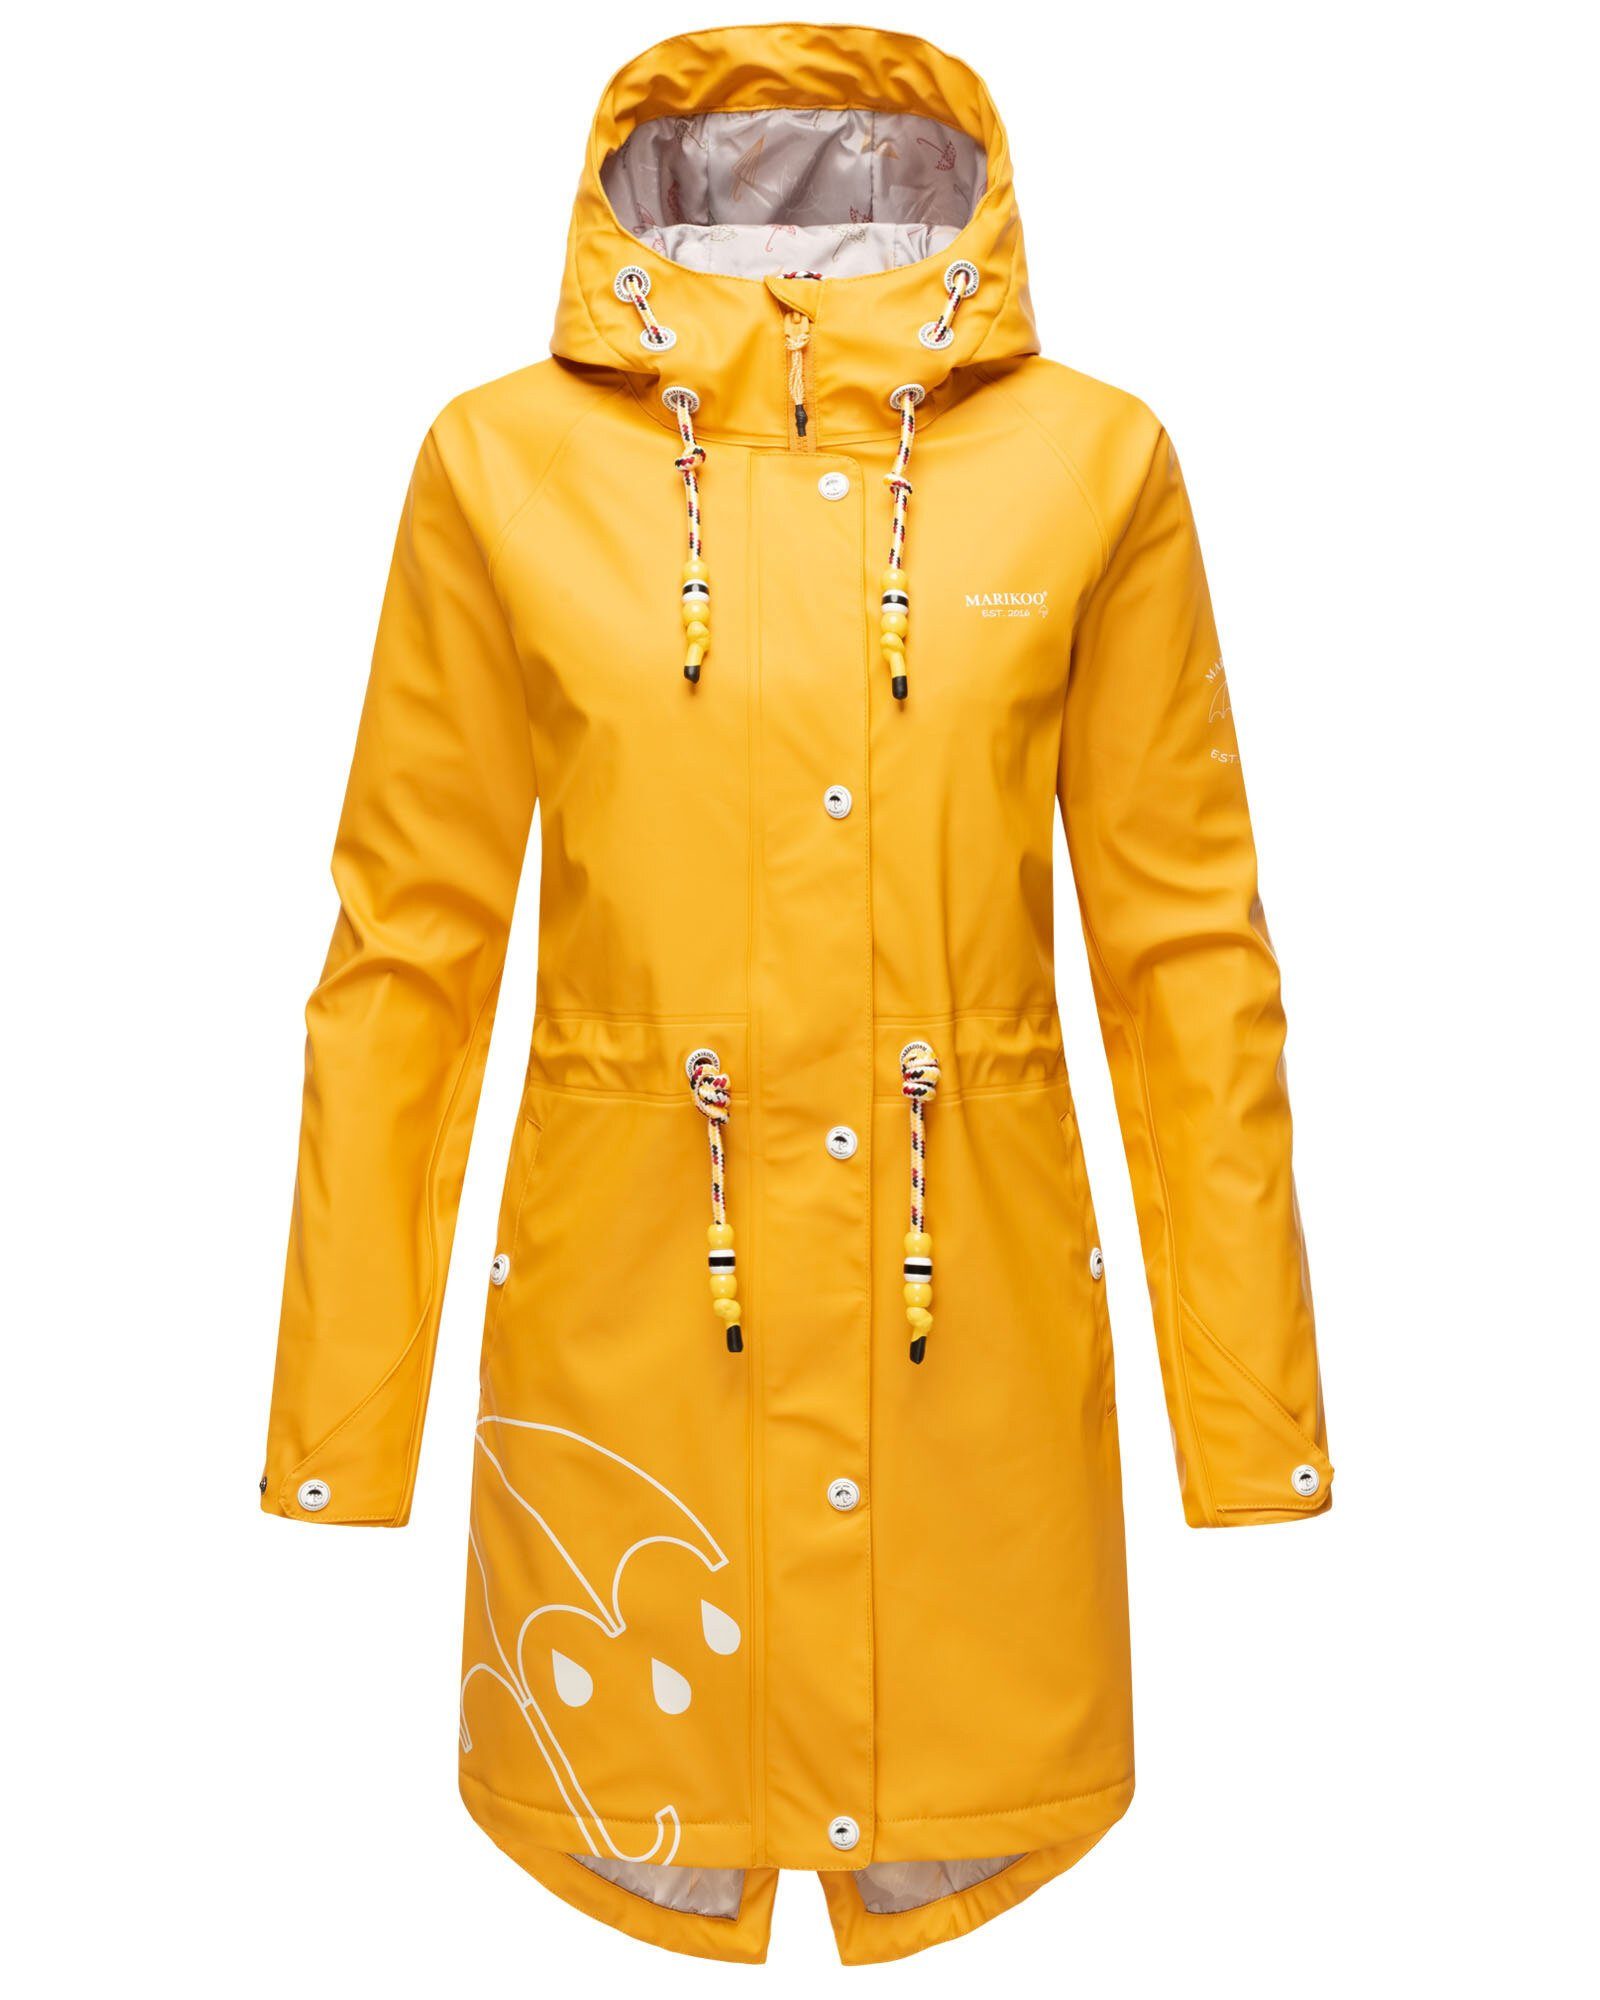 Marikoo Outdoorjacke Dancing Umbrella mit einer großen Kapuze Amber Yellow | Jacken